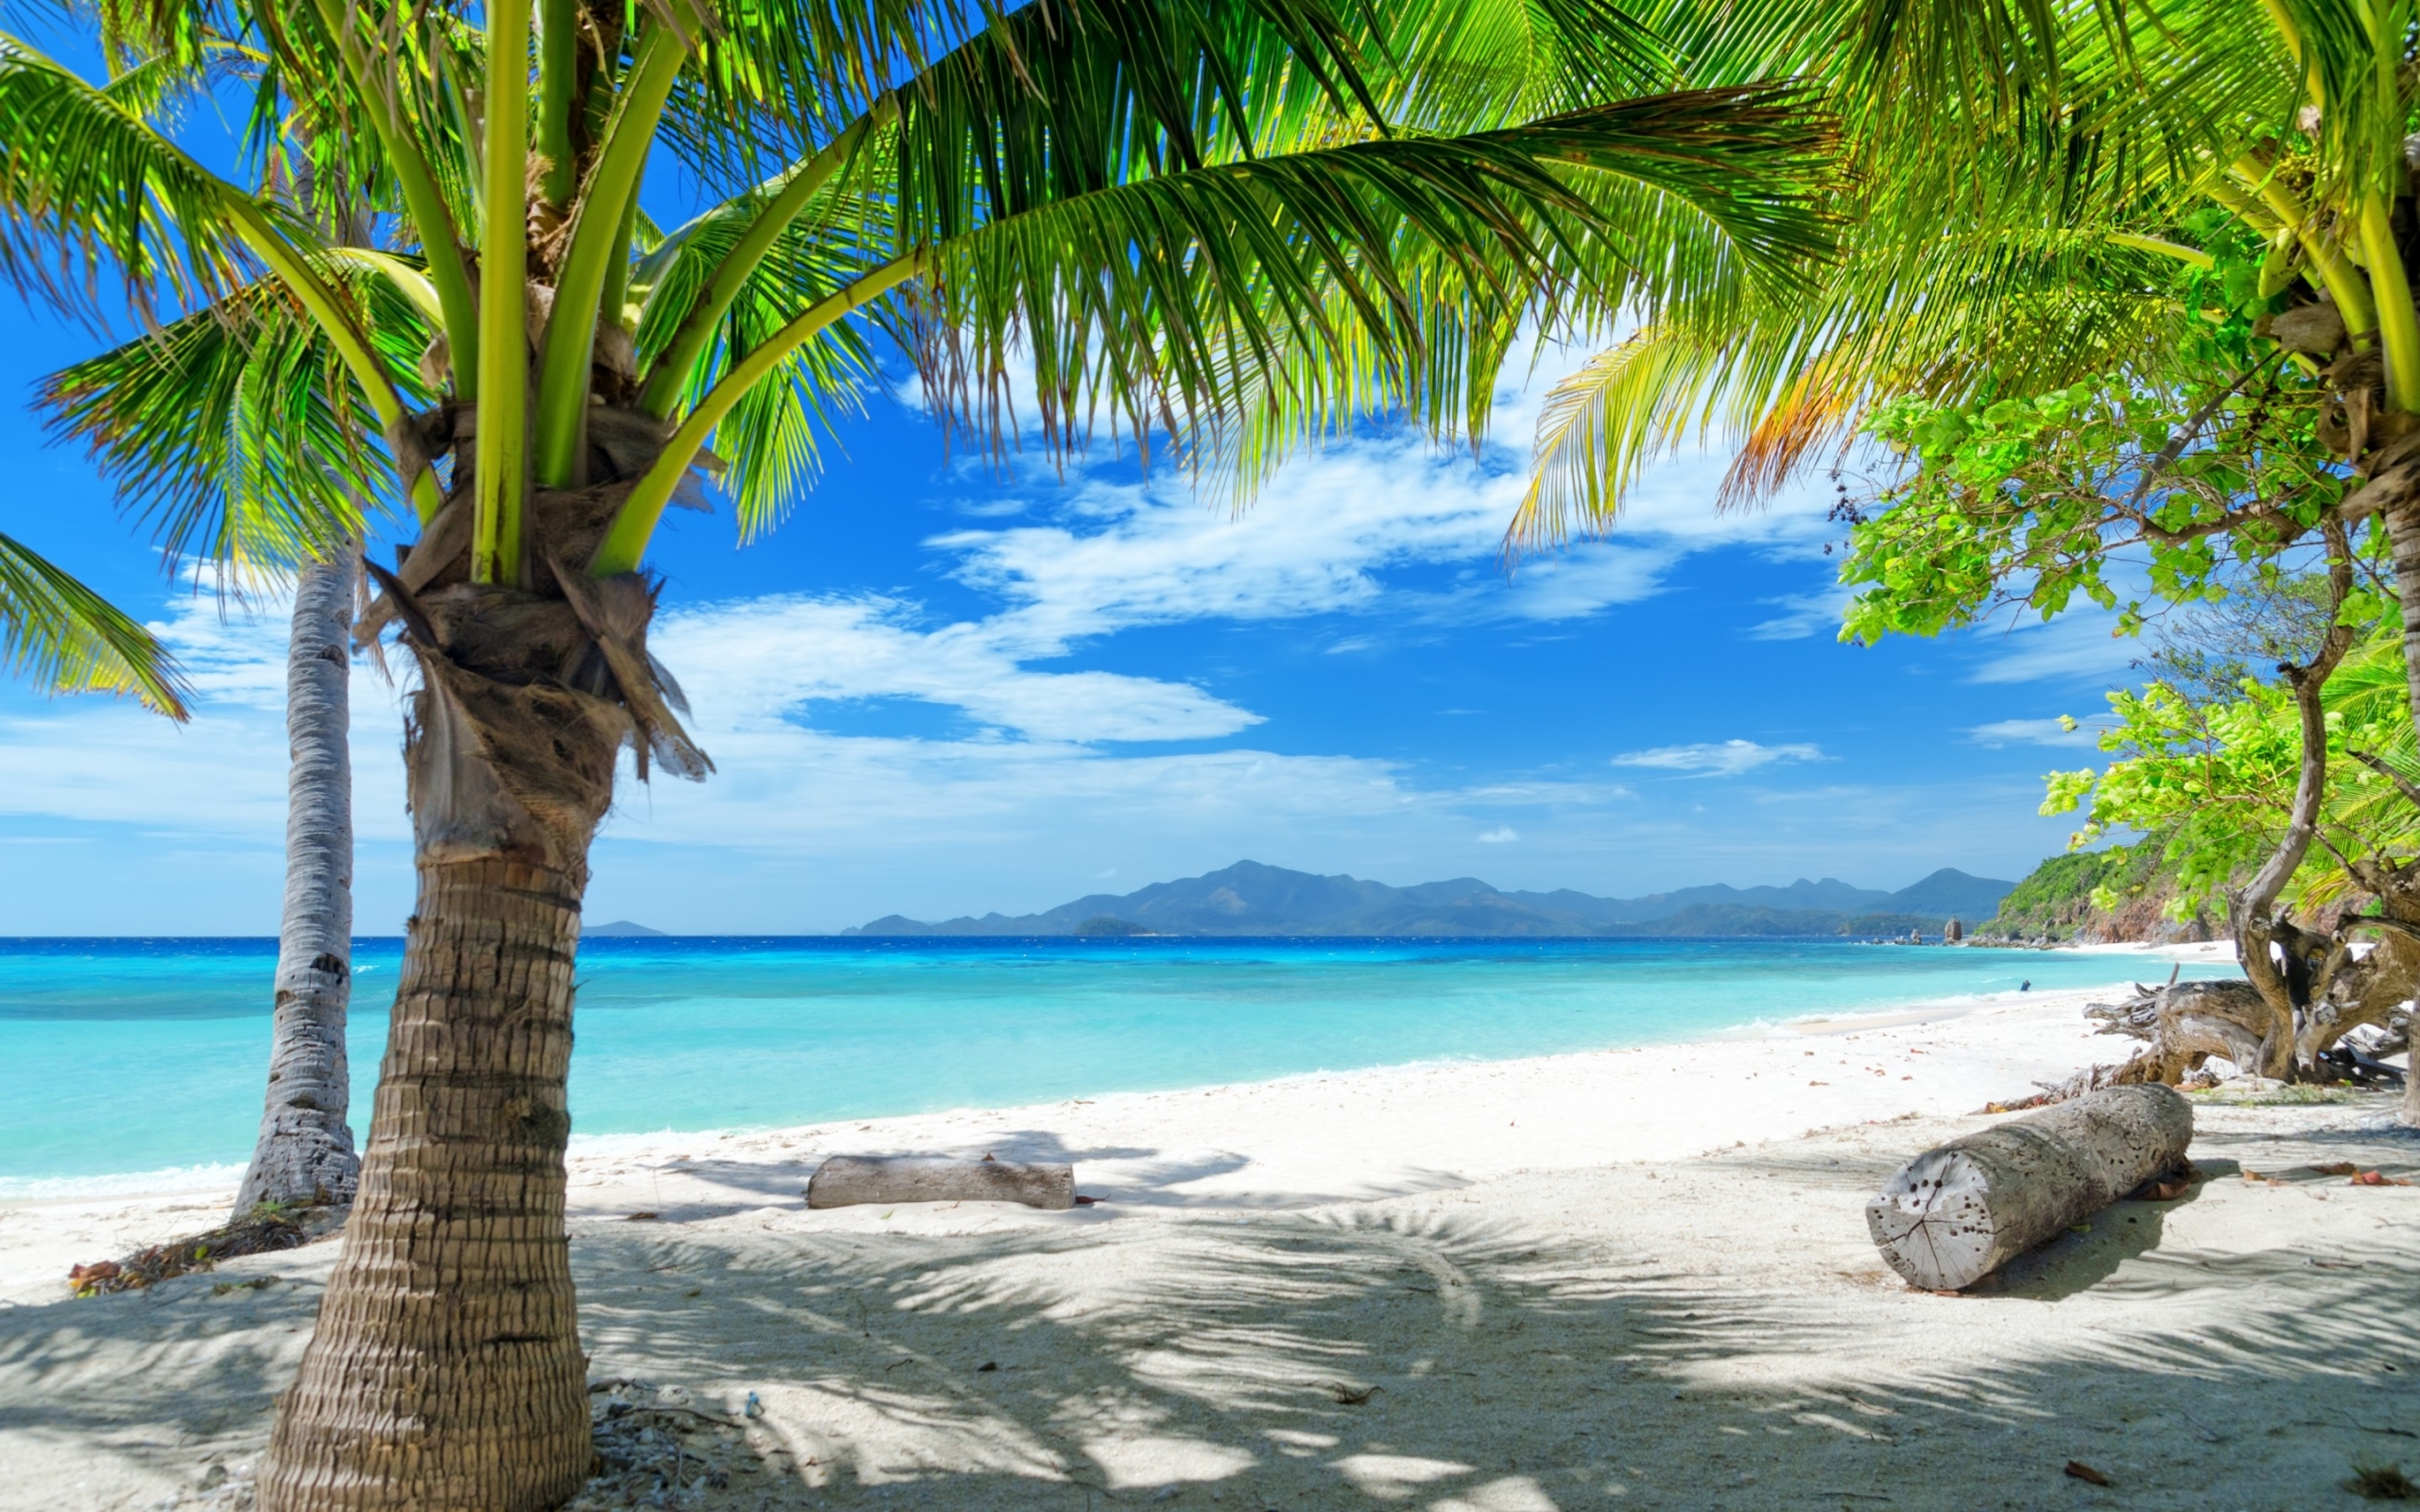  beach with palm trees HD Desktop Wallpaper HD Desktop Wallpaper